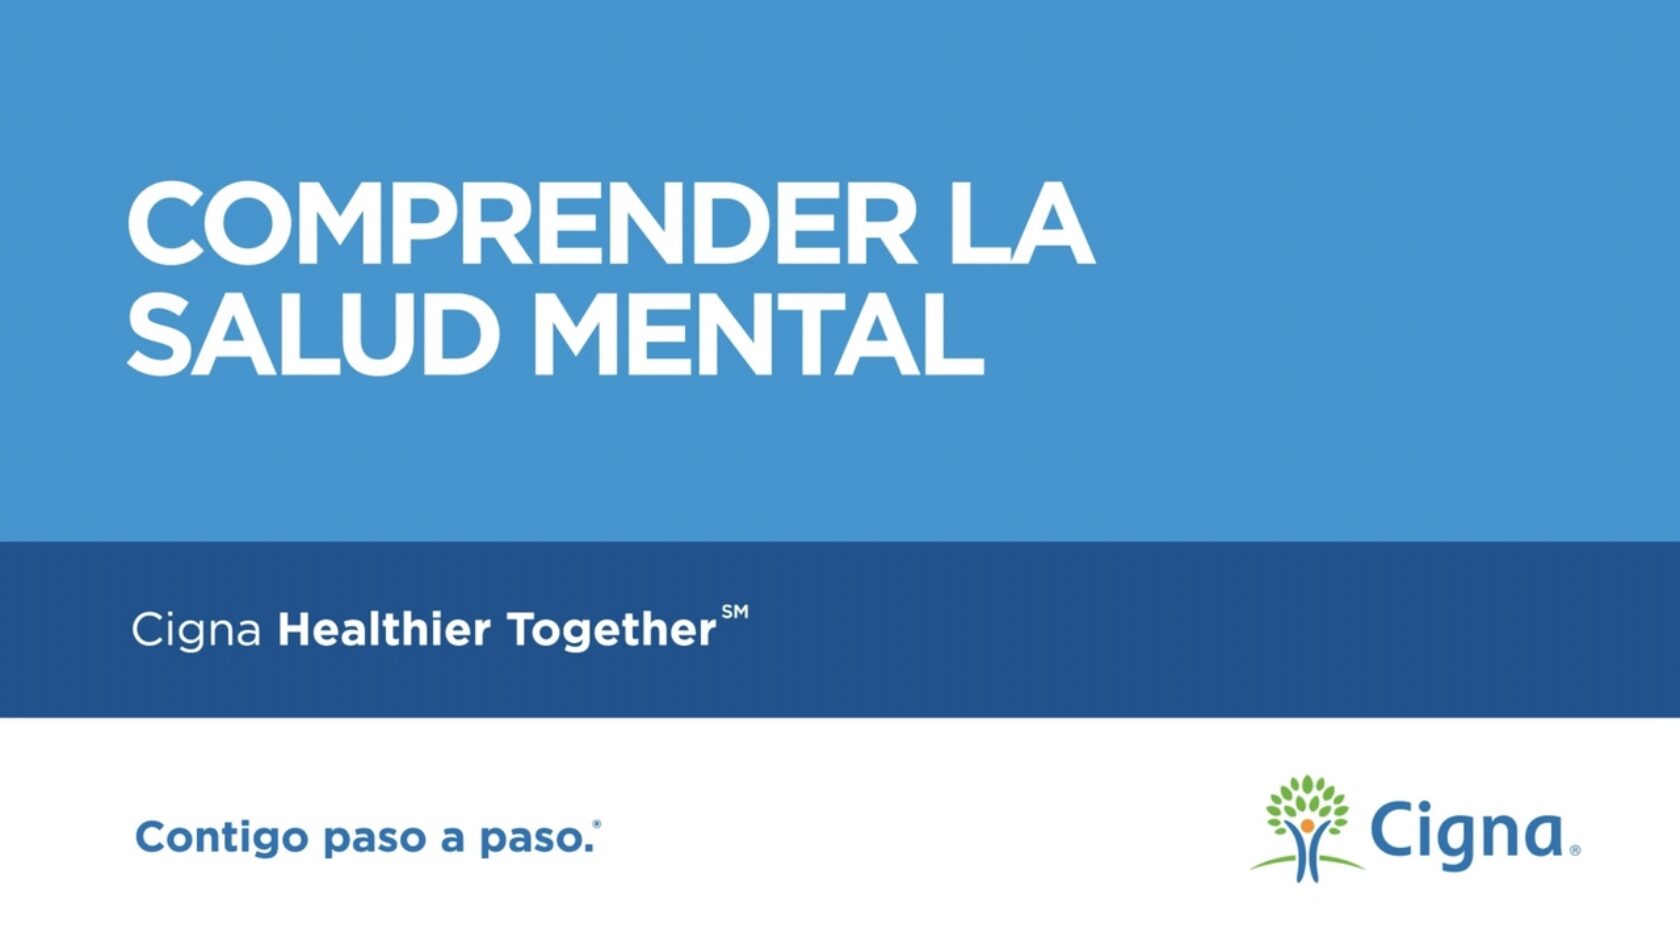 Video: Comprender la salud mental